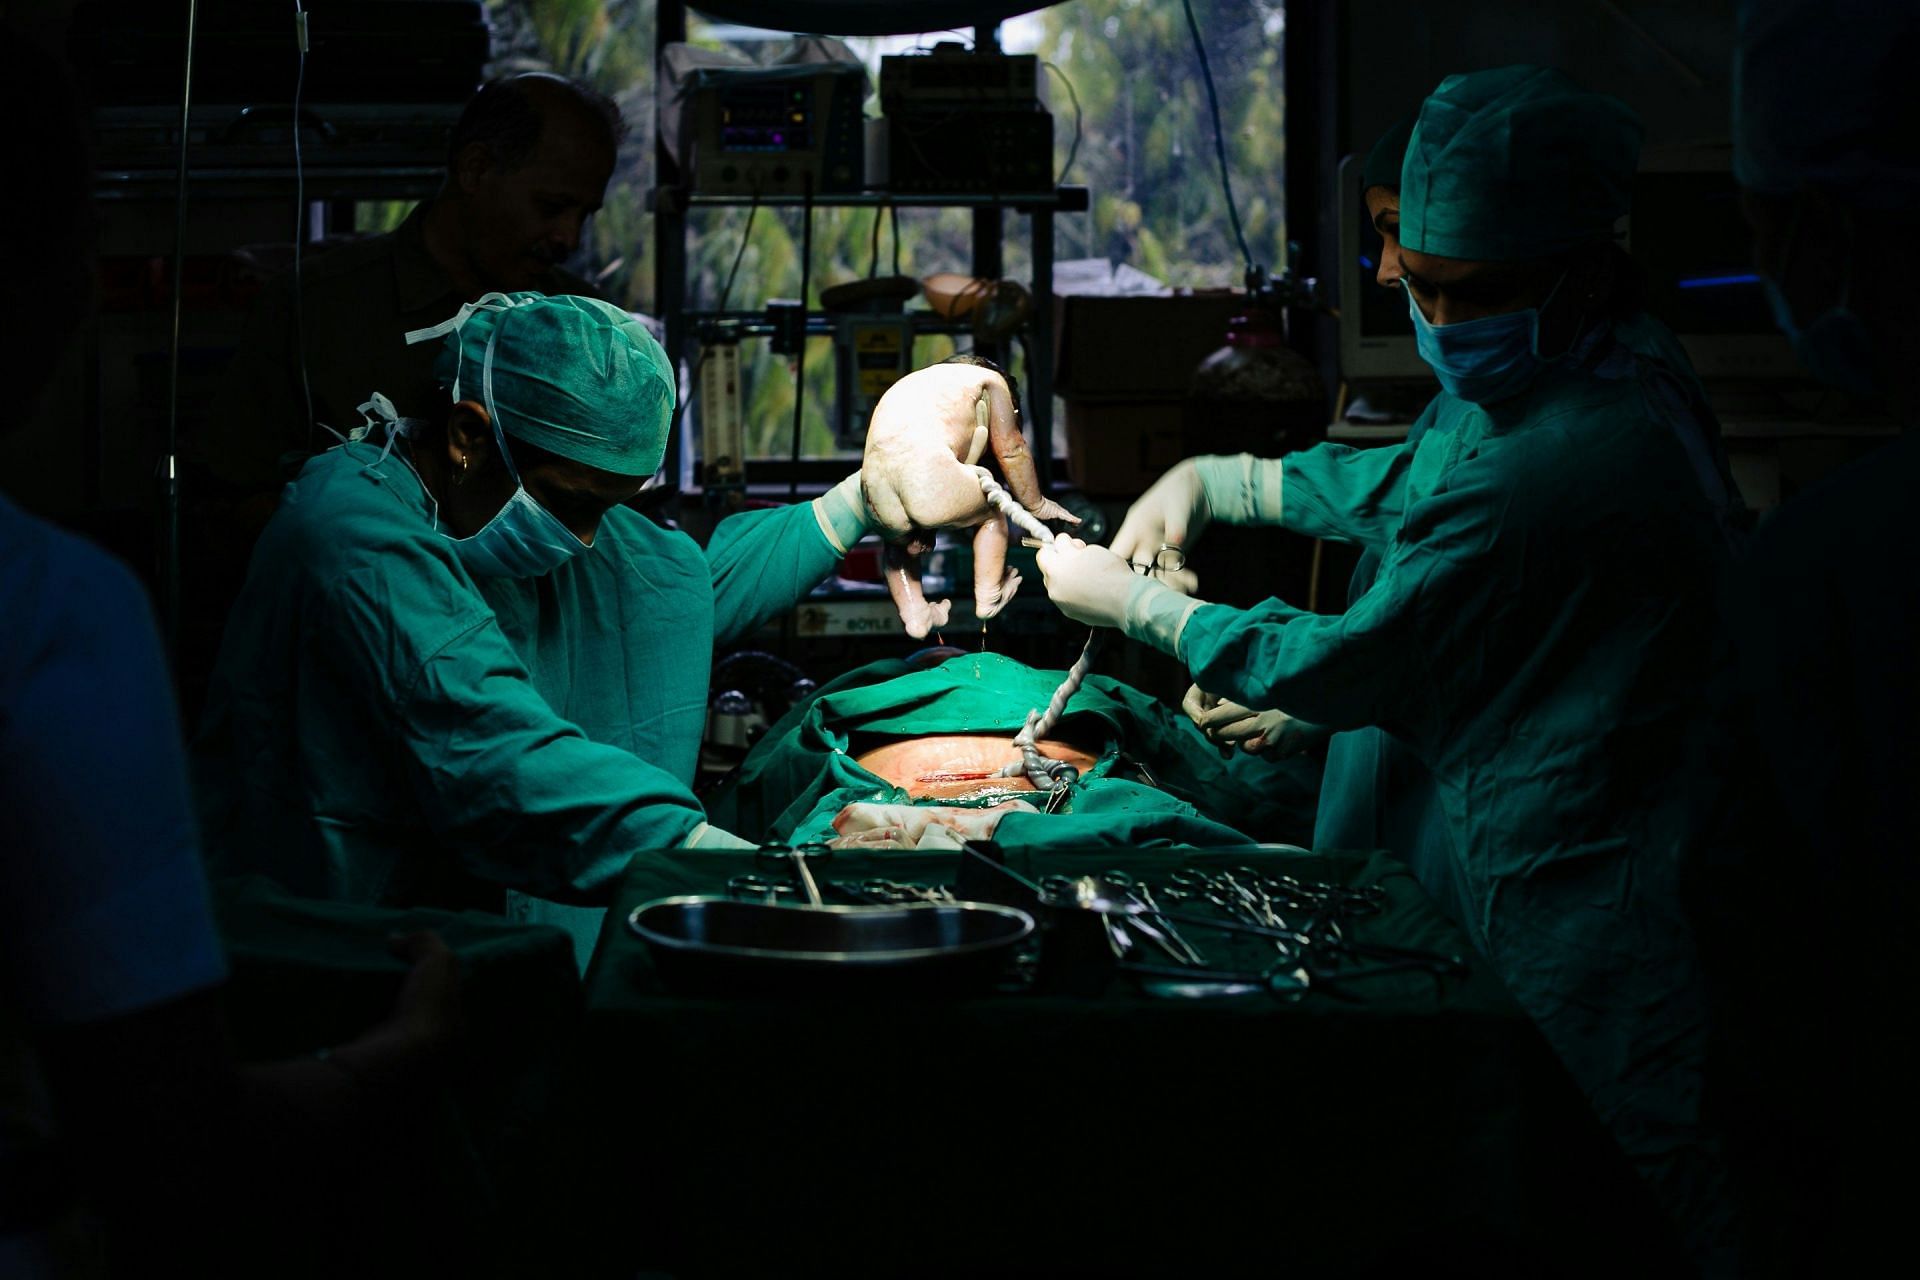 Surgery to treat umbilical hernia (Image by Amit Gaur/Unsplash)